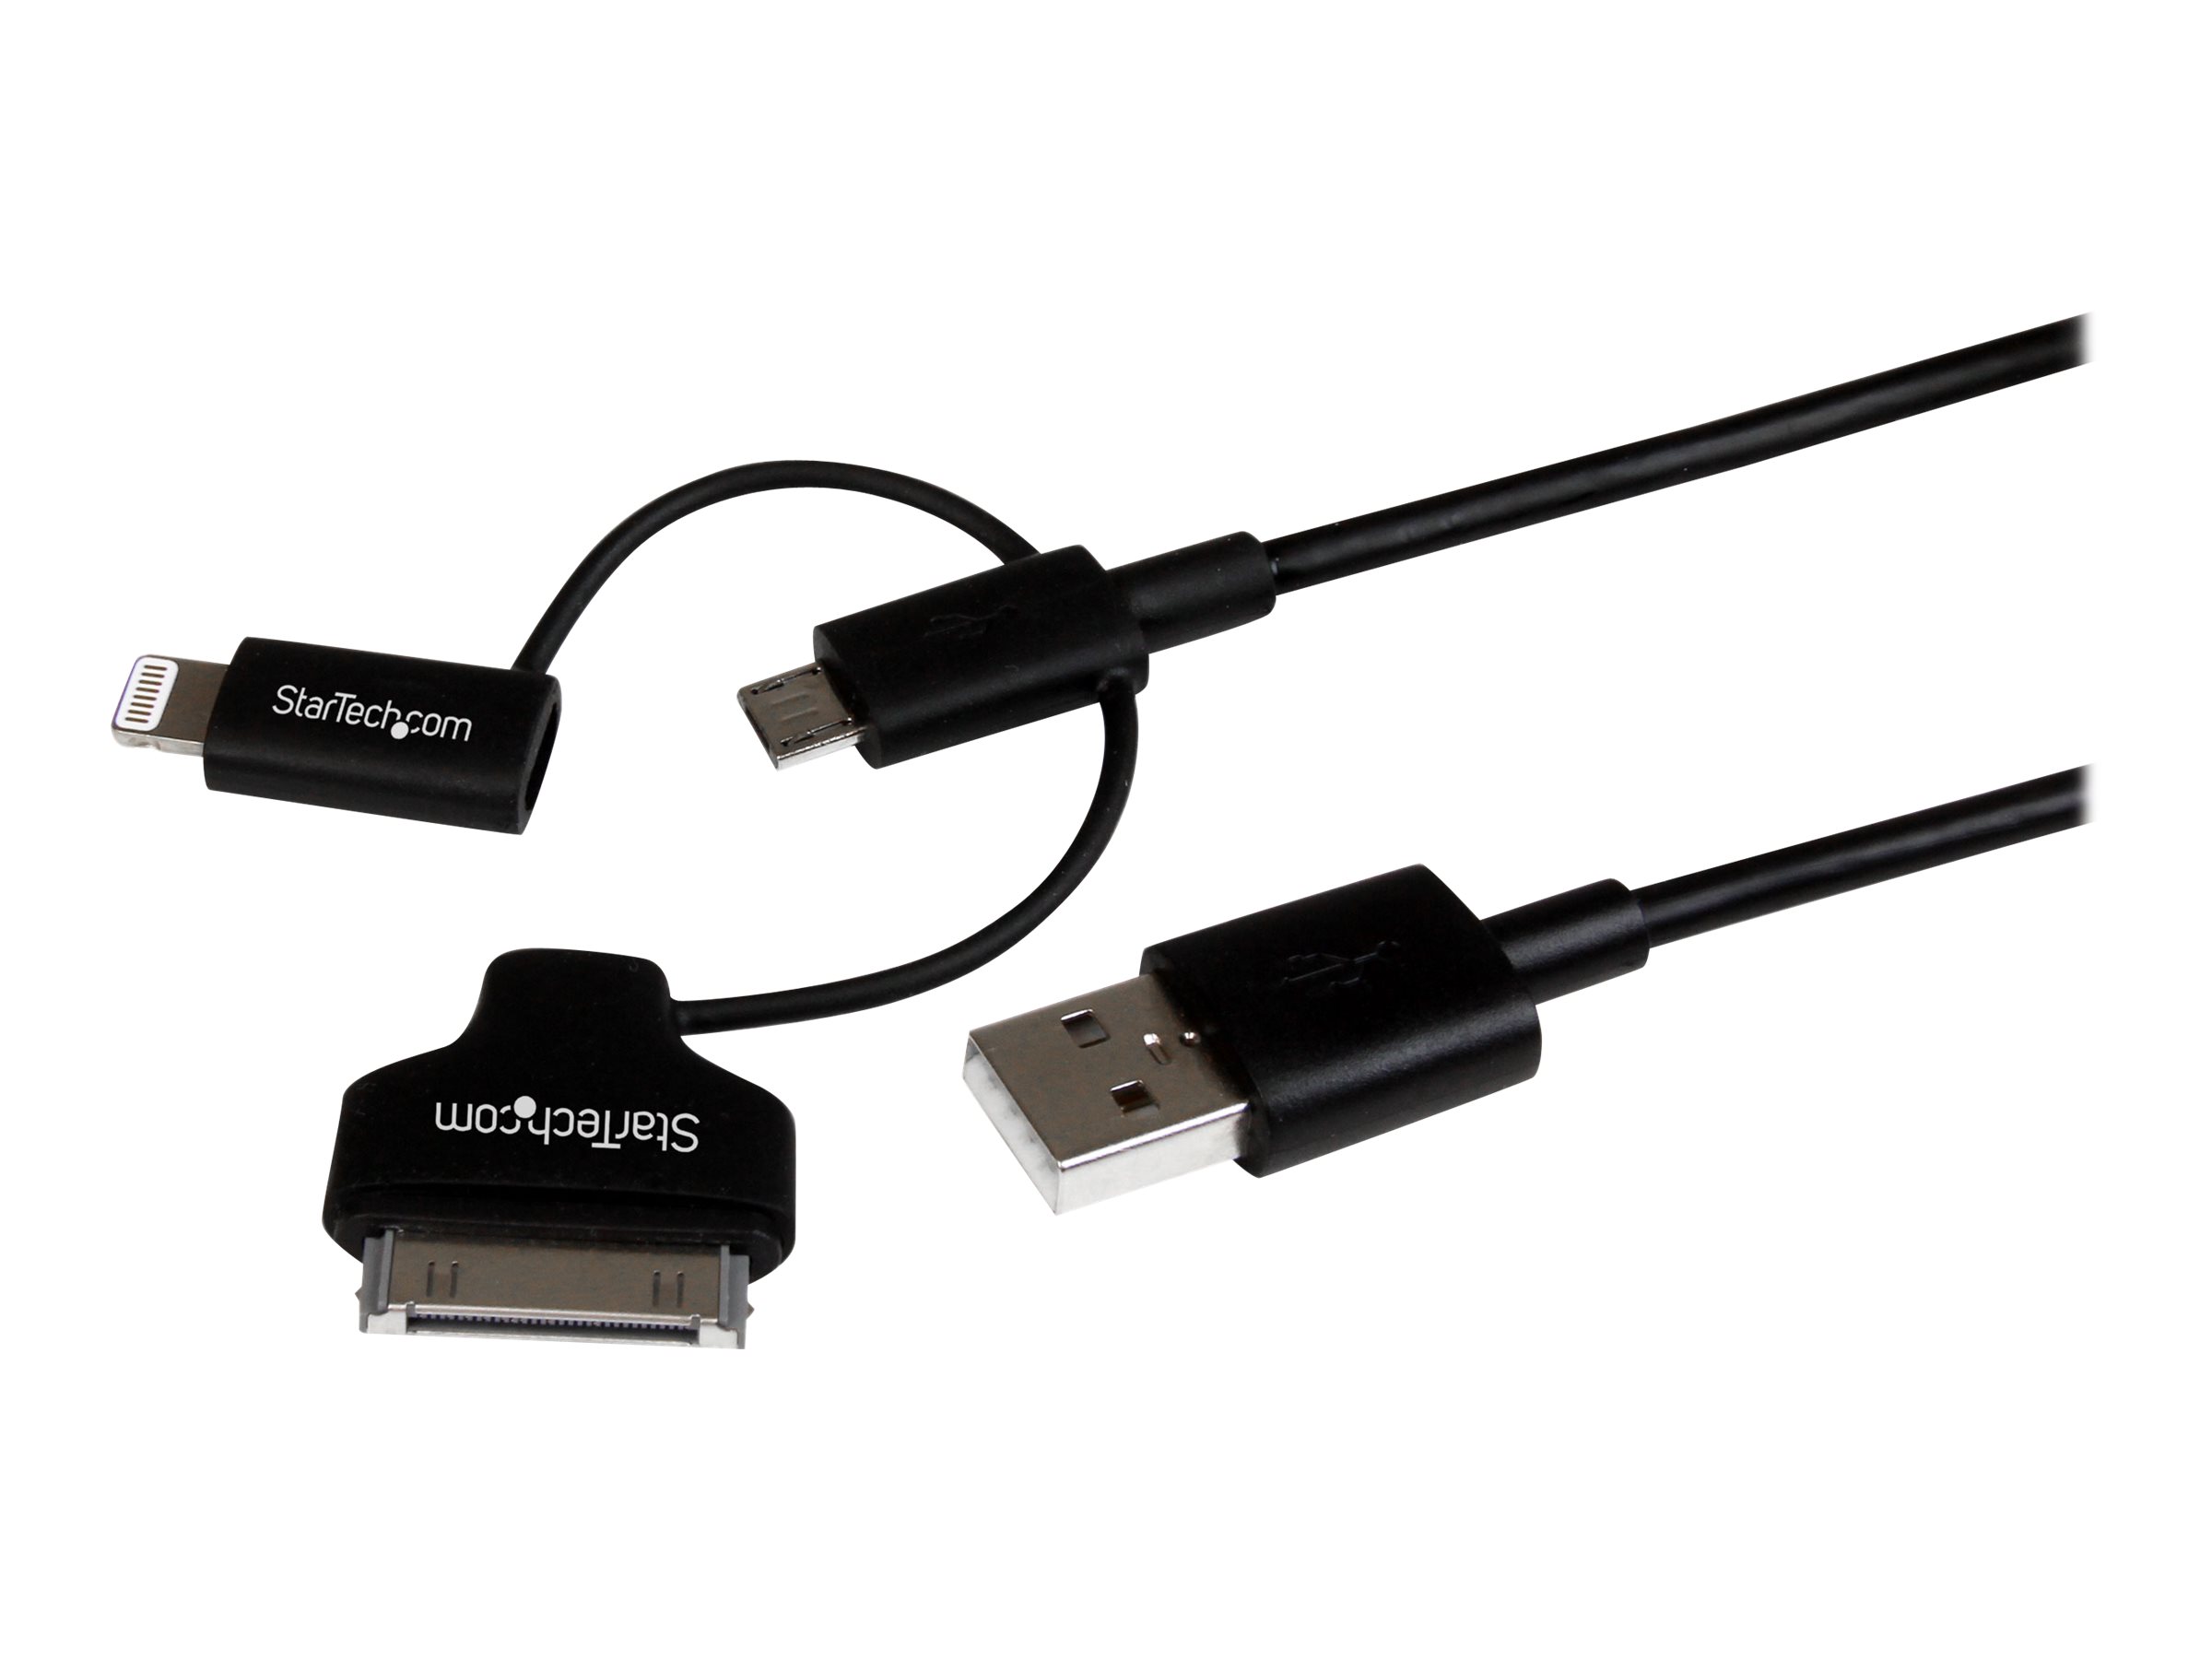 StarTech.com 1m Lightning oder 30-pin Dock oder Micro USB auf USB Kabel - Schwarz - Lade- / Datenkabel - Lade-/Datenkabel - Appl